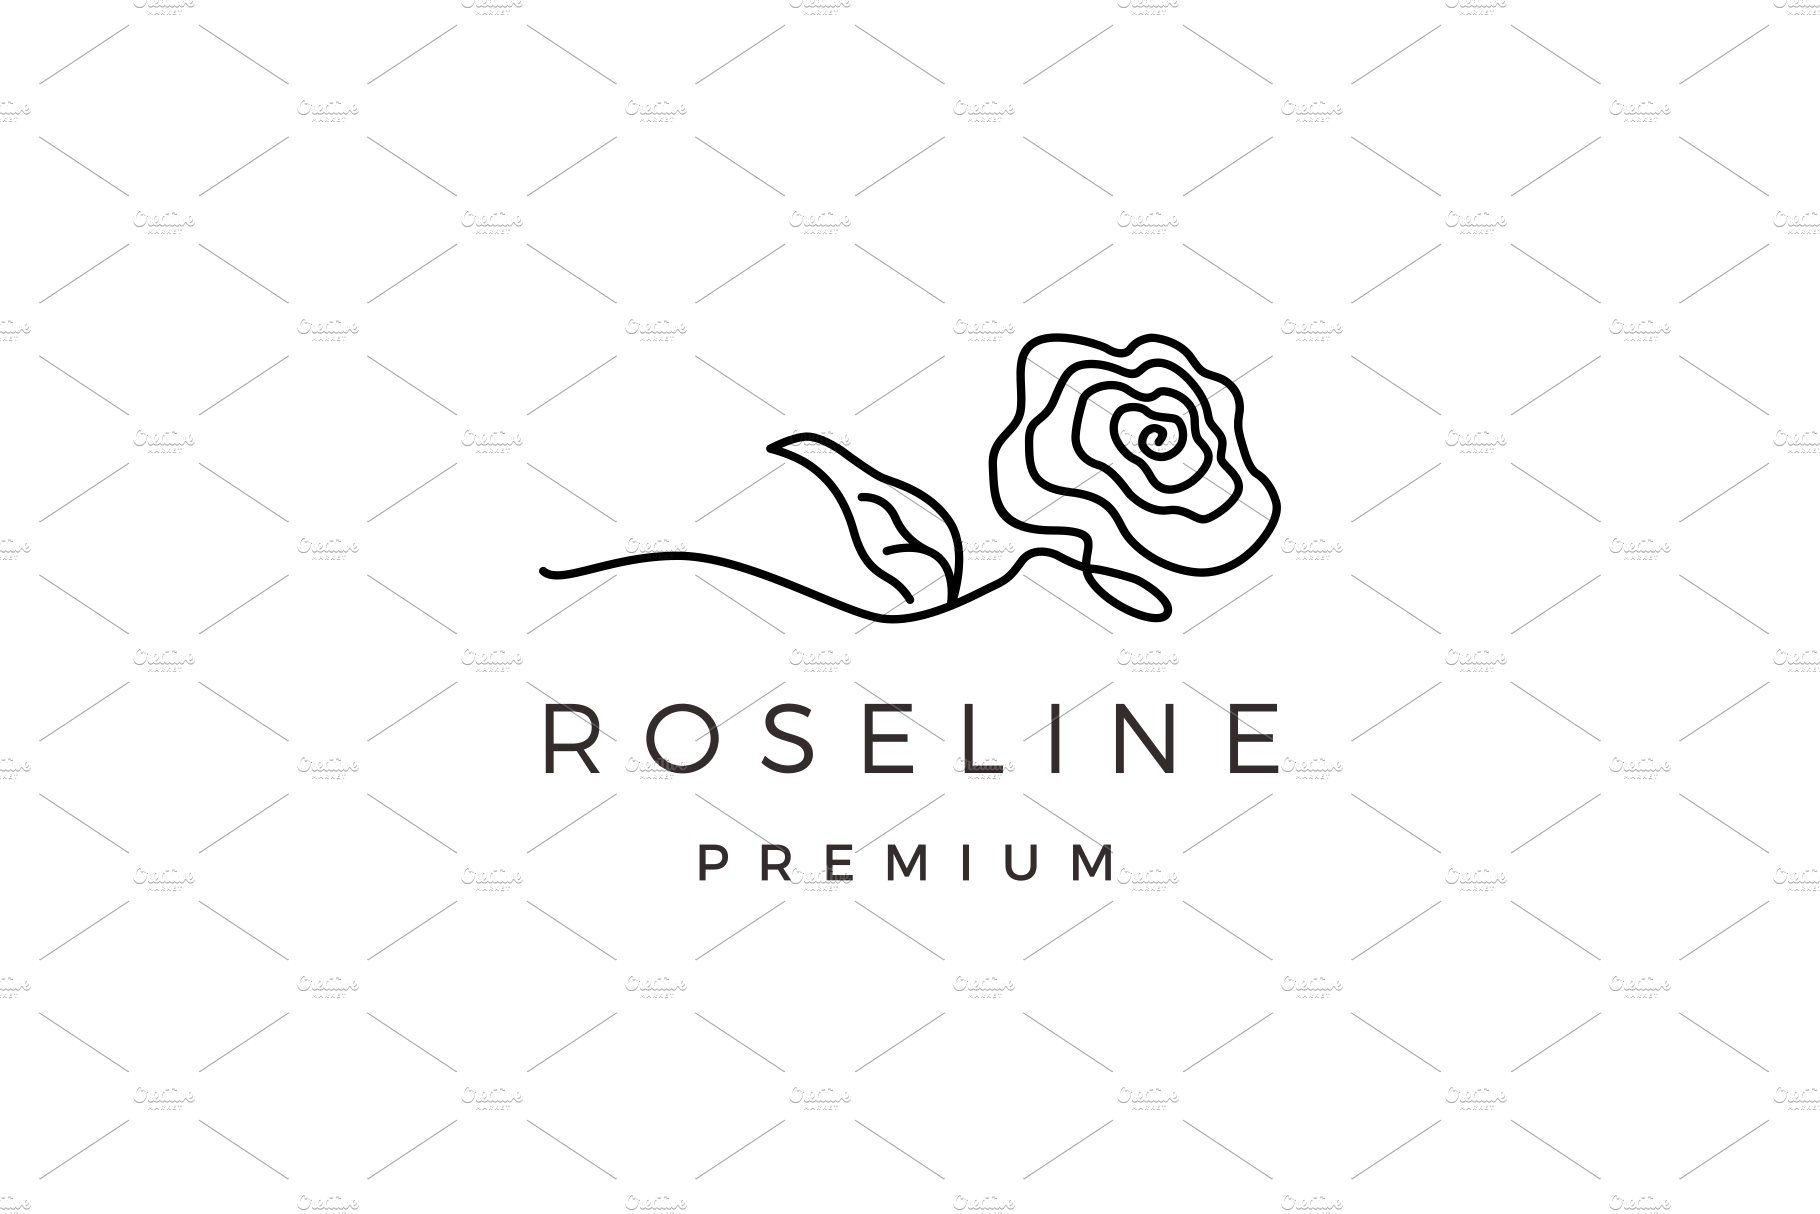 rose line outline monoline logo cover image.